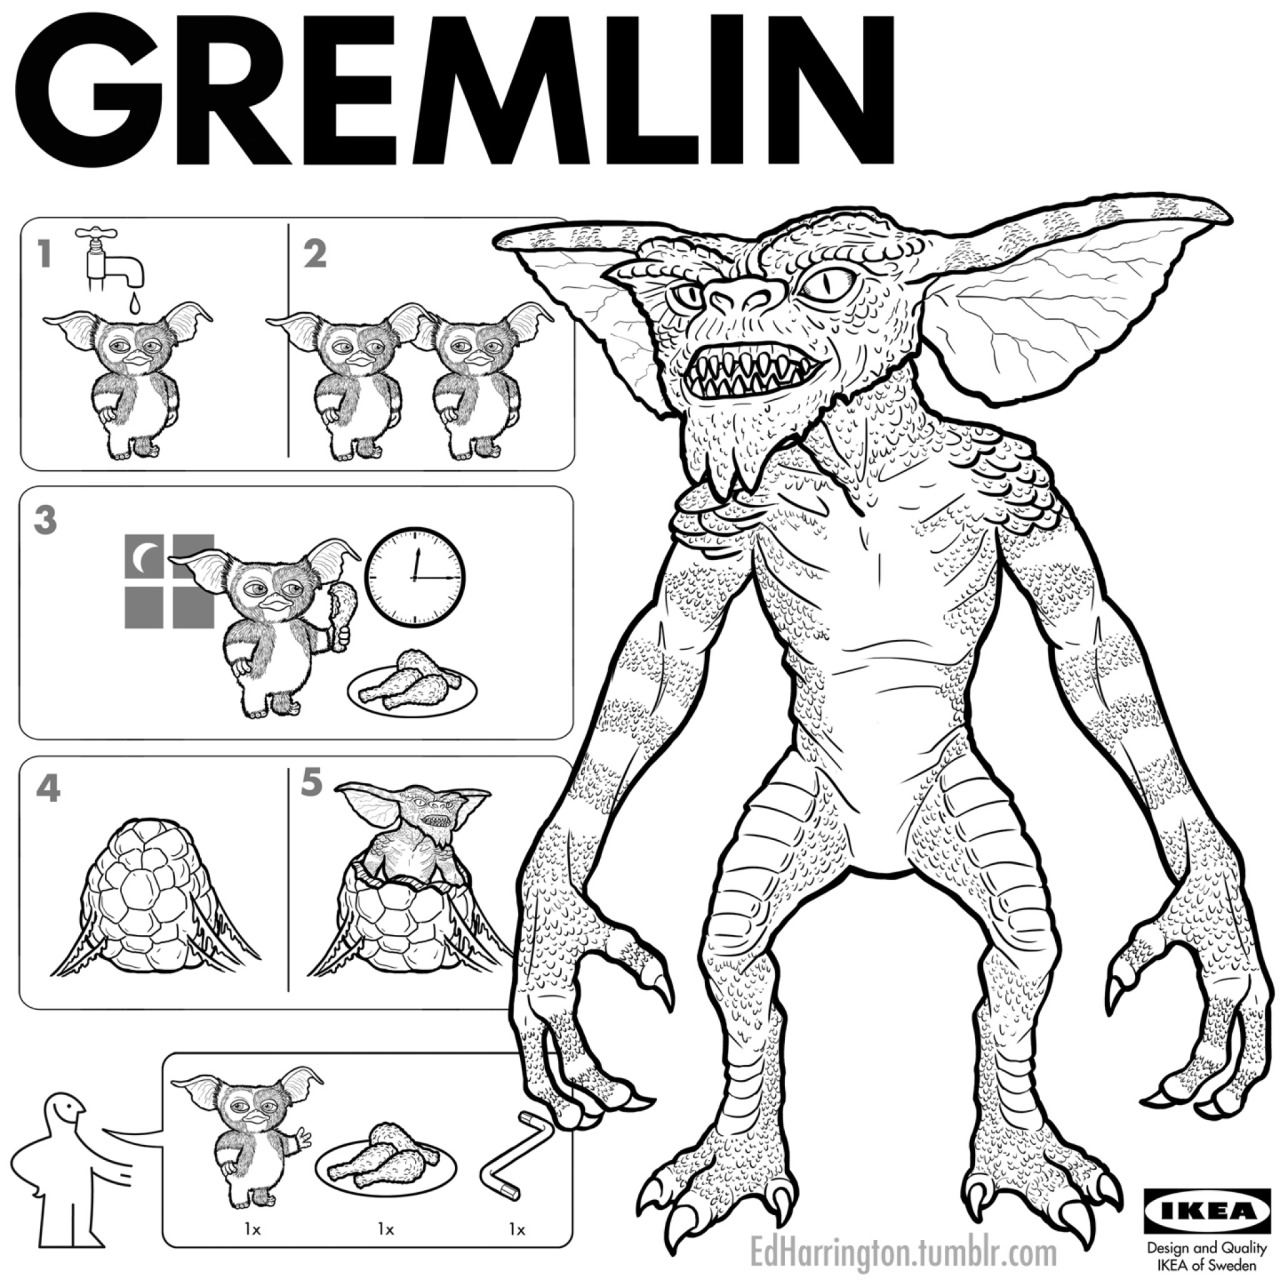 Gremlins: Secrets of the Mogwai review – lesser yet passable